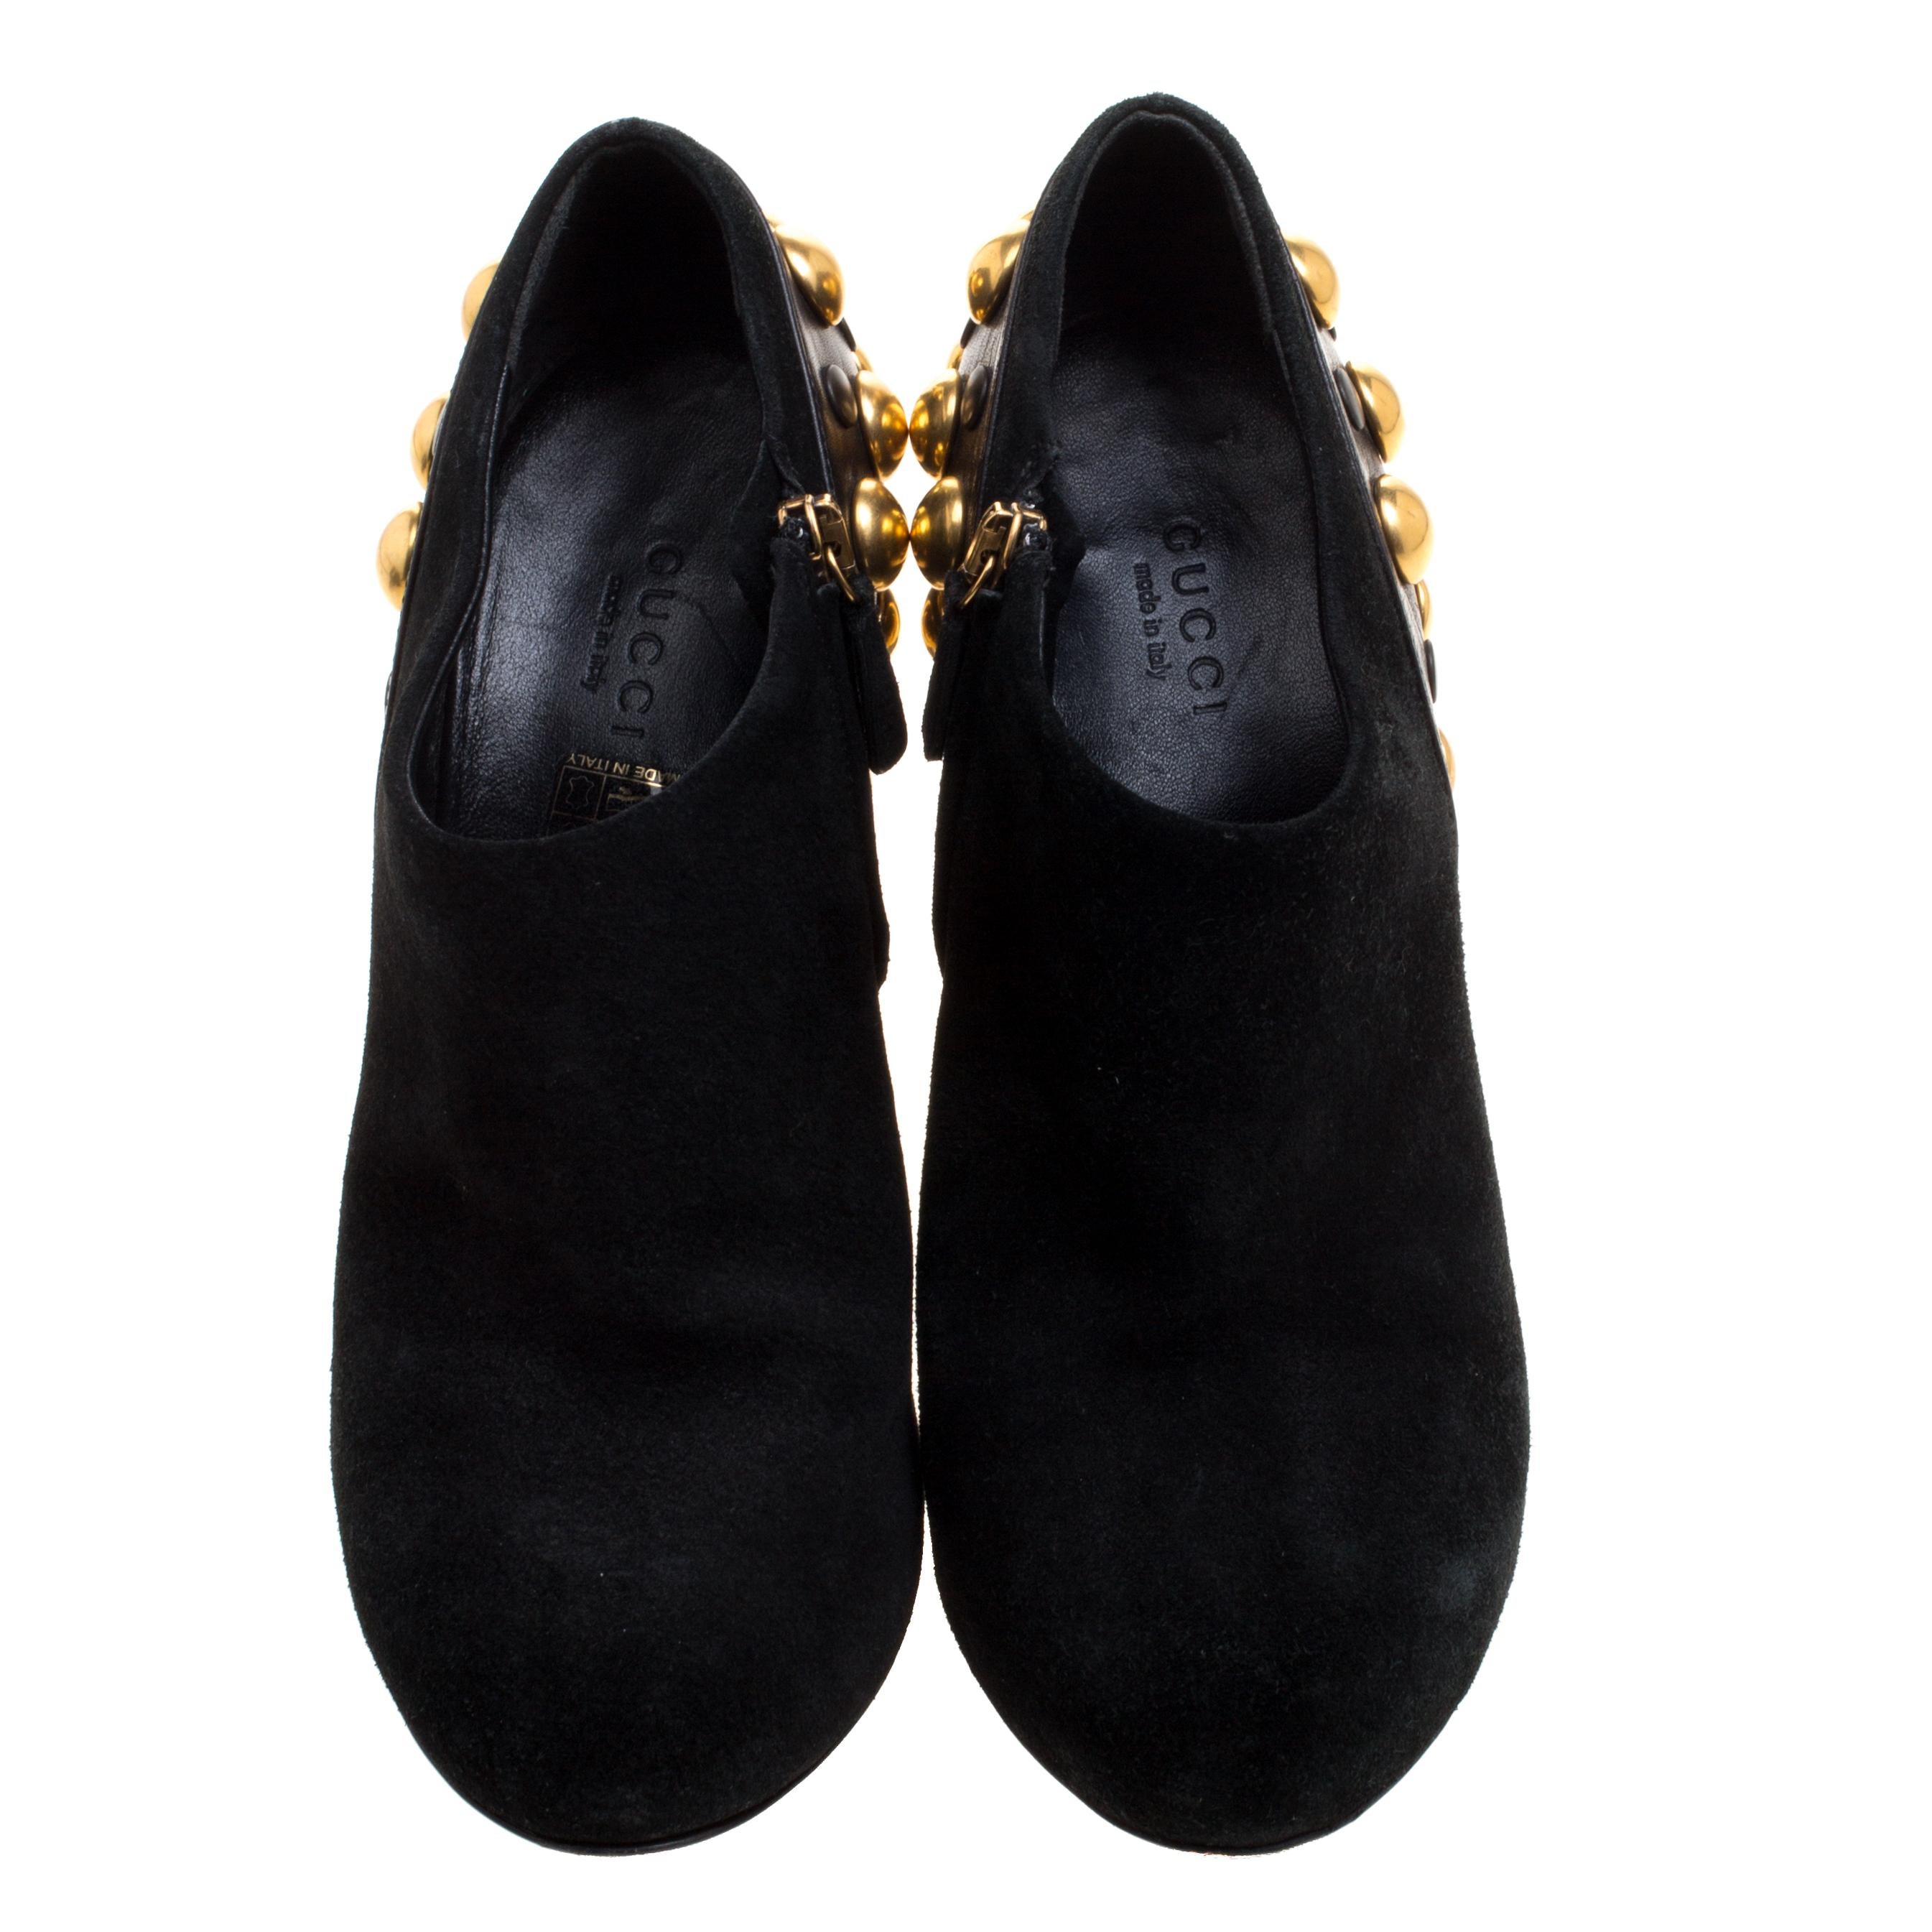 Women's Gucci Black Suede Vintage Babouska Studded Heel Ankle Boots Size 37.5